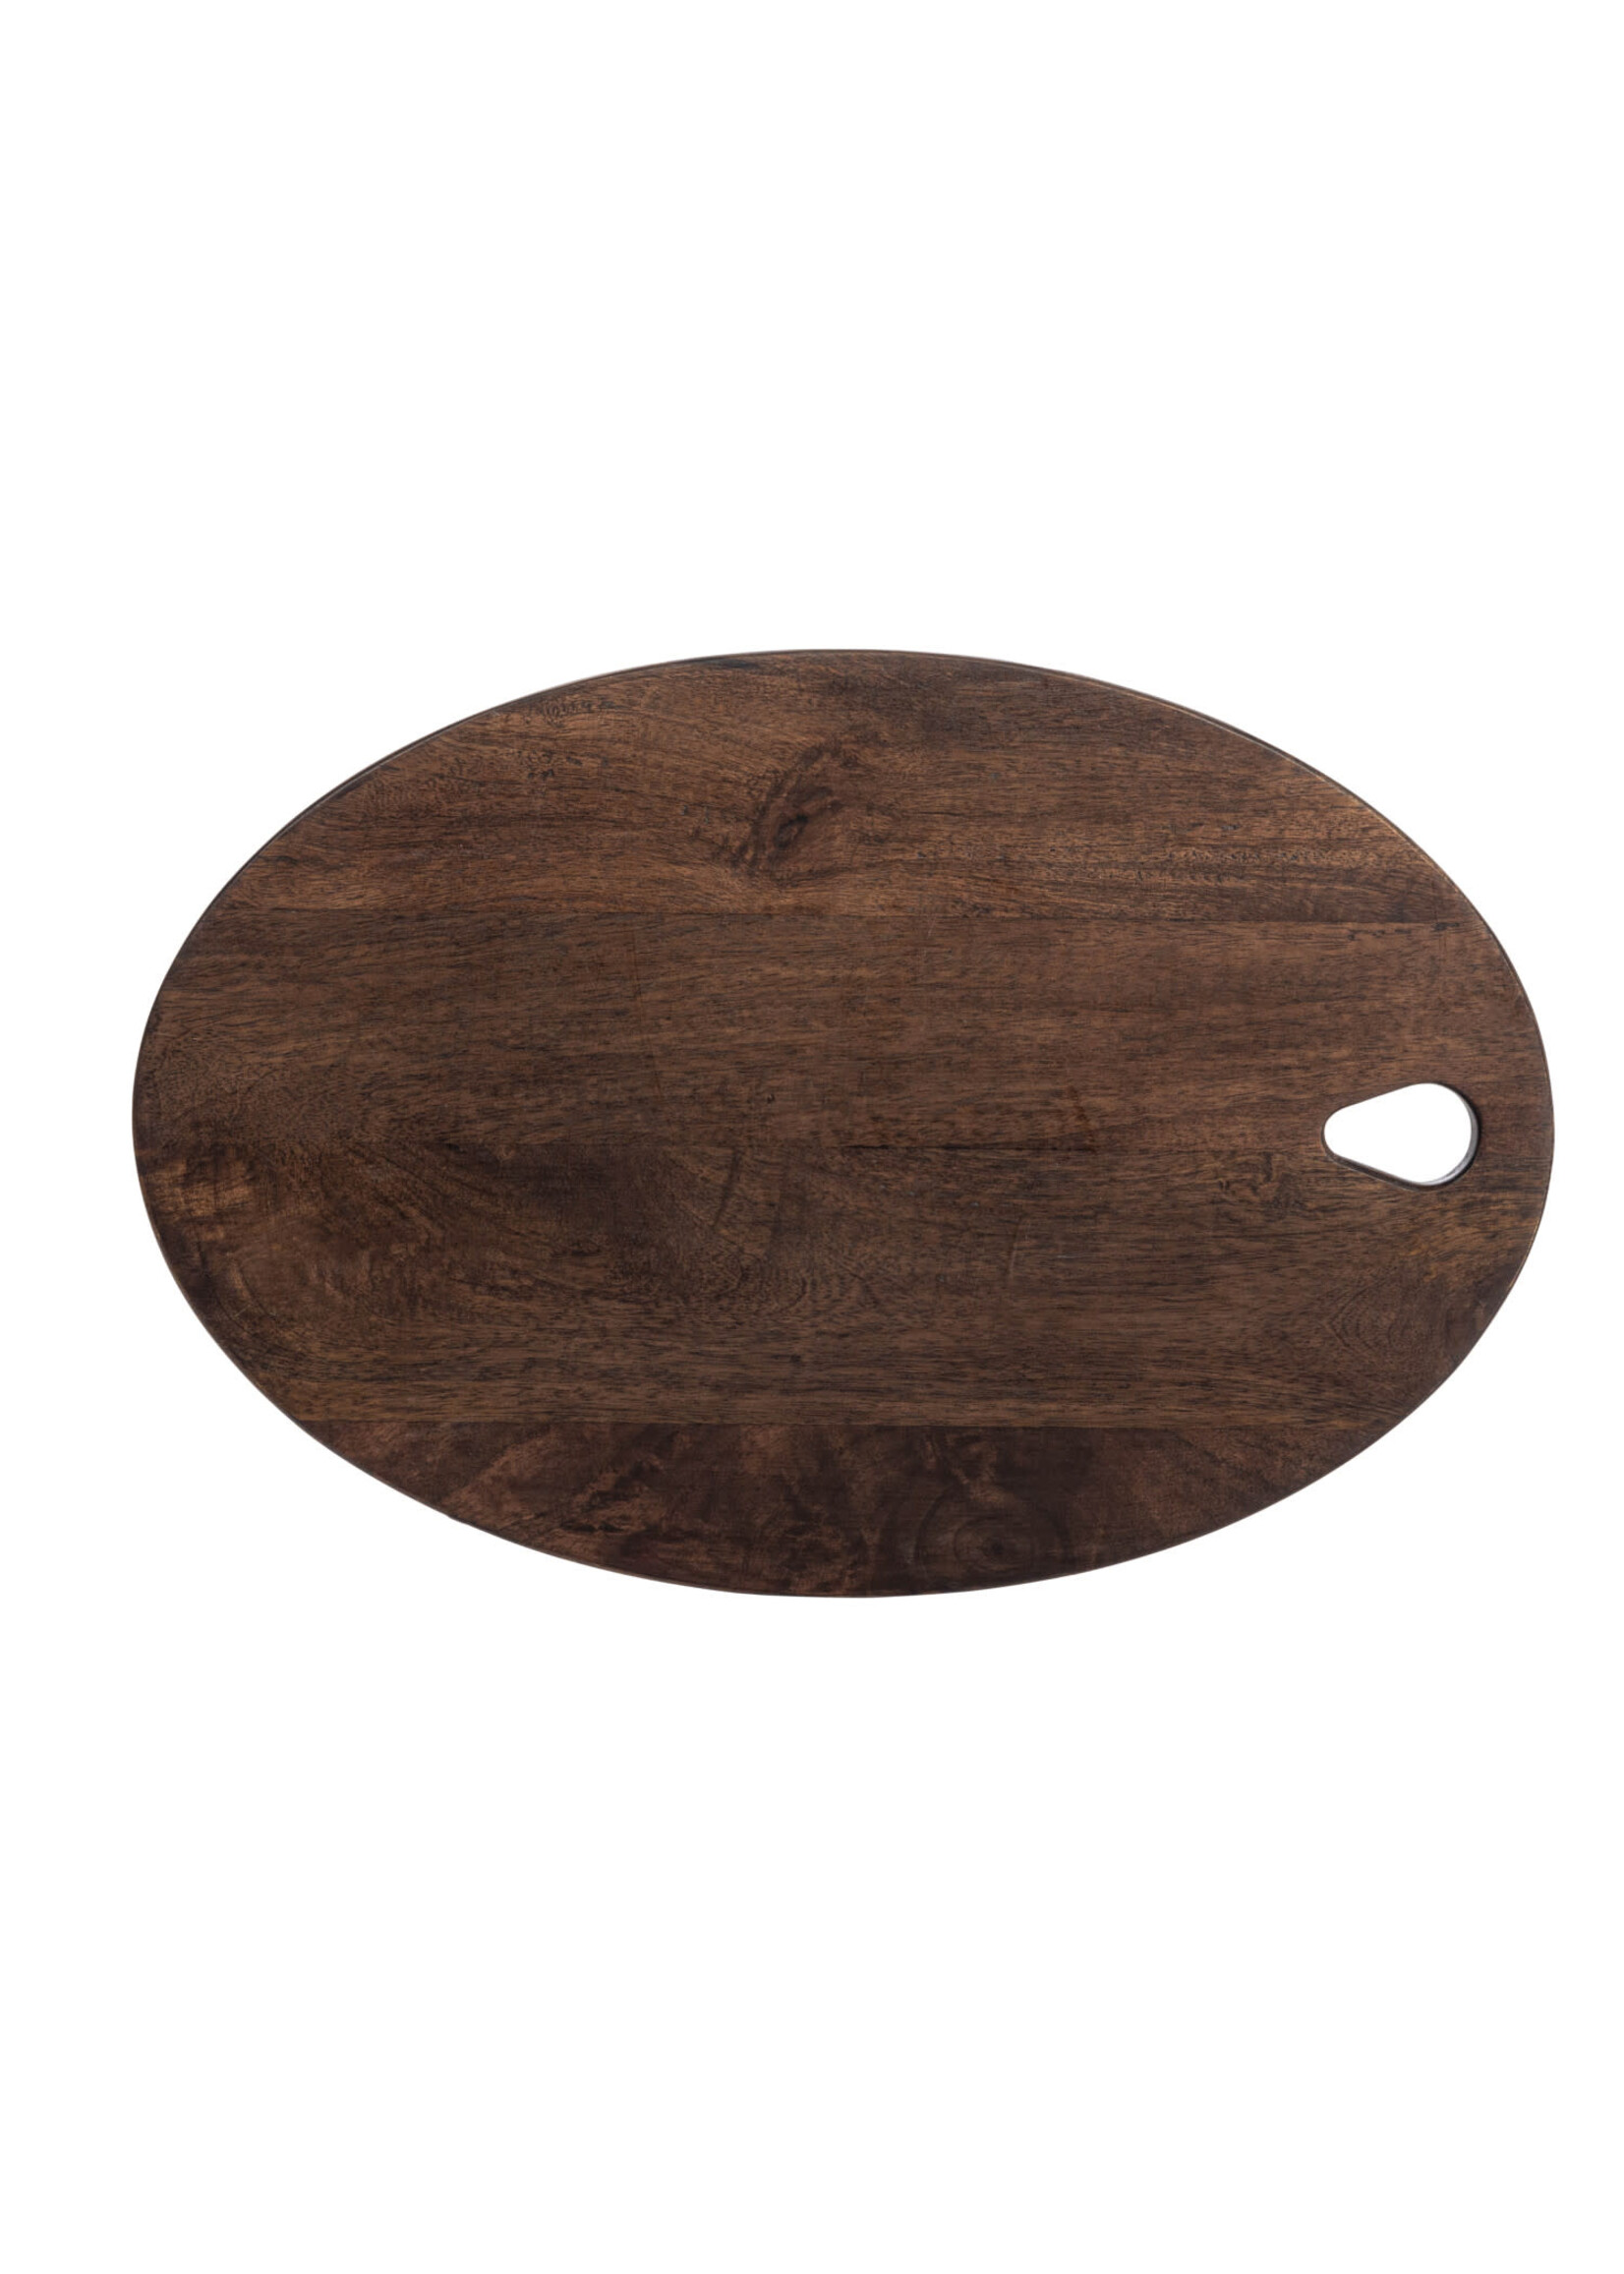 Oval Mango Wood Cheese/Cutting Board, Black